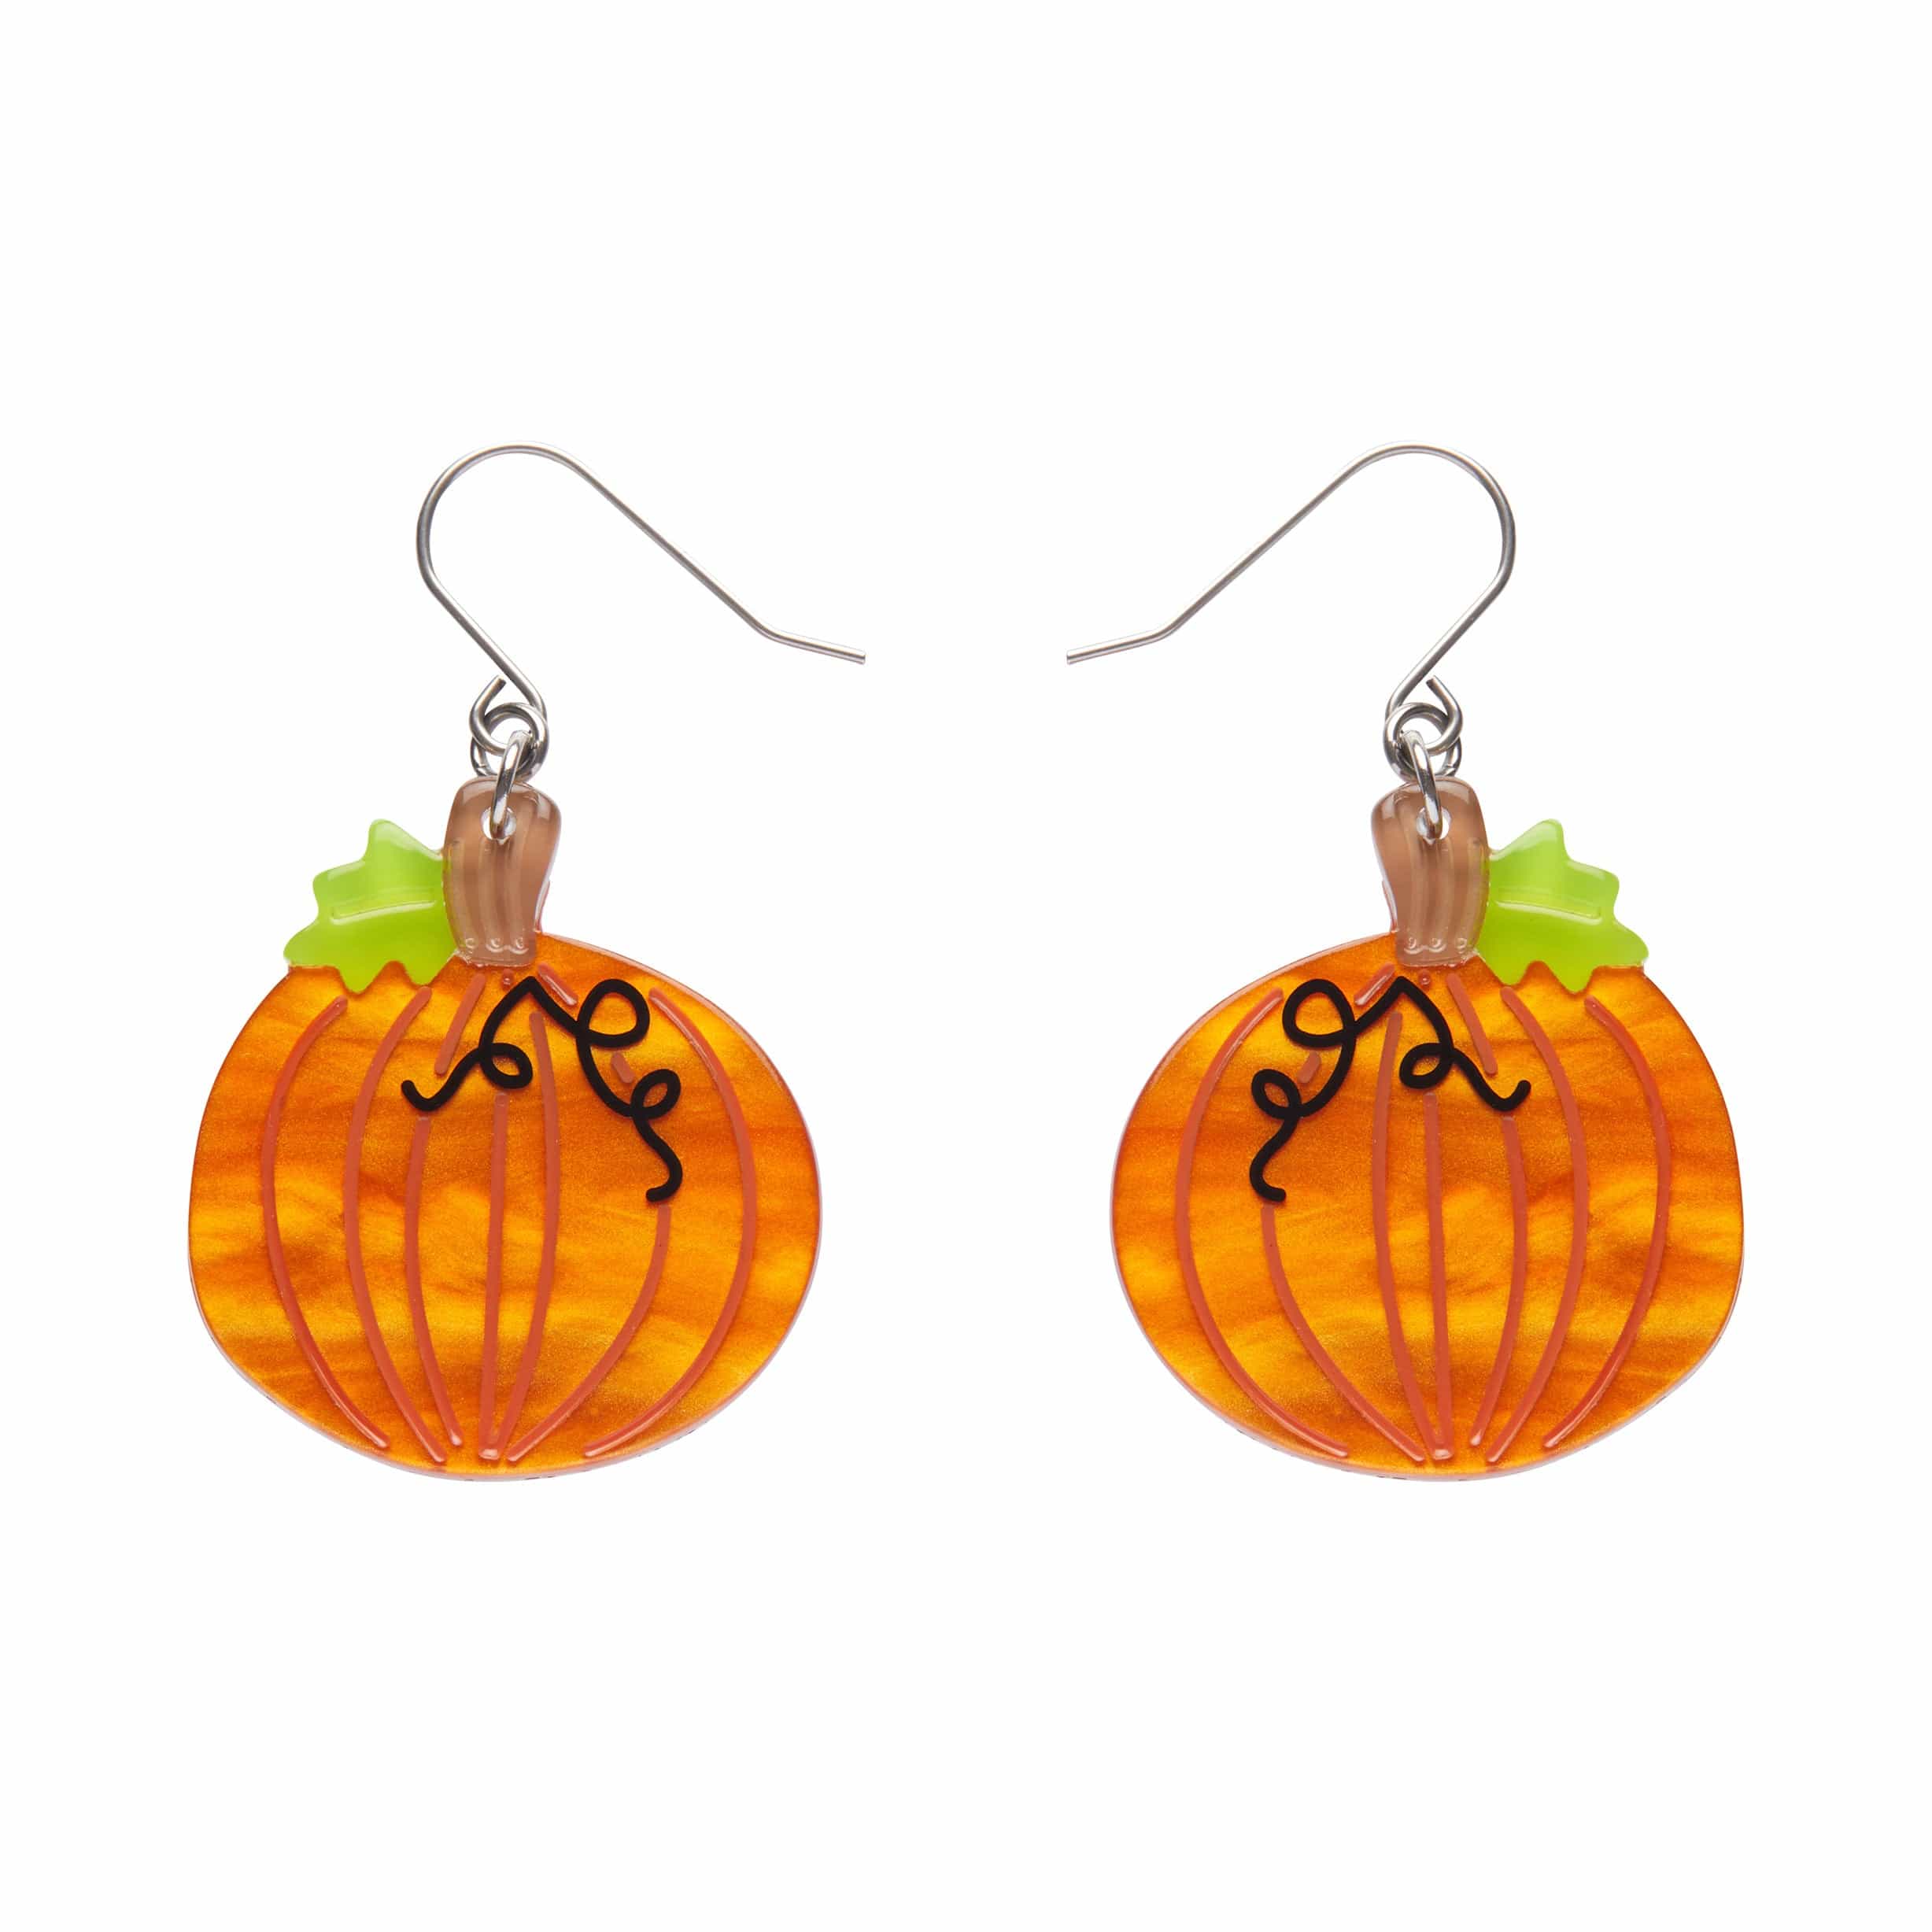 Midnight Magic Pumpkin Drop Earrings  -  Erstwilder  -  Quirky Resin and Enamel Accessories